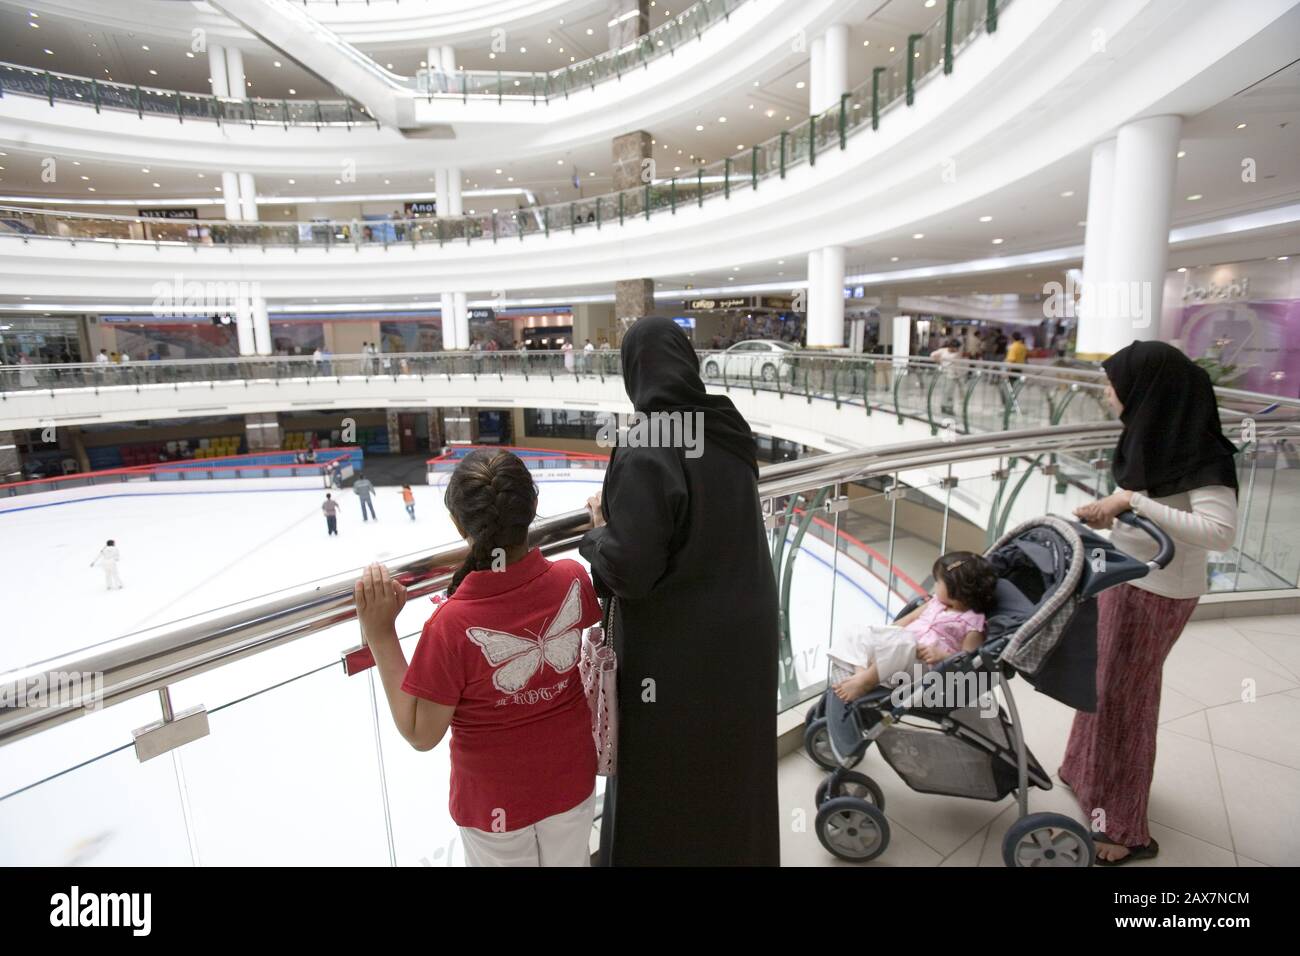 The ice rink at the City Center Mall, Doha, Qatar. Stock Photo